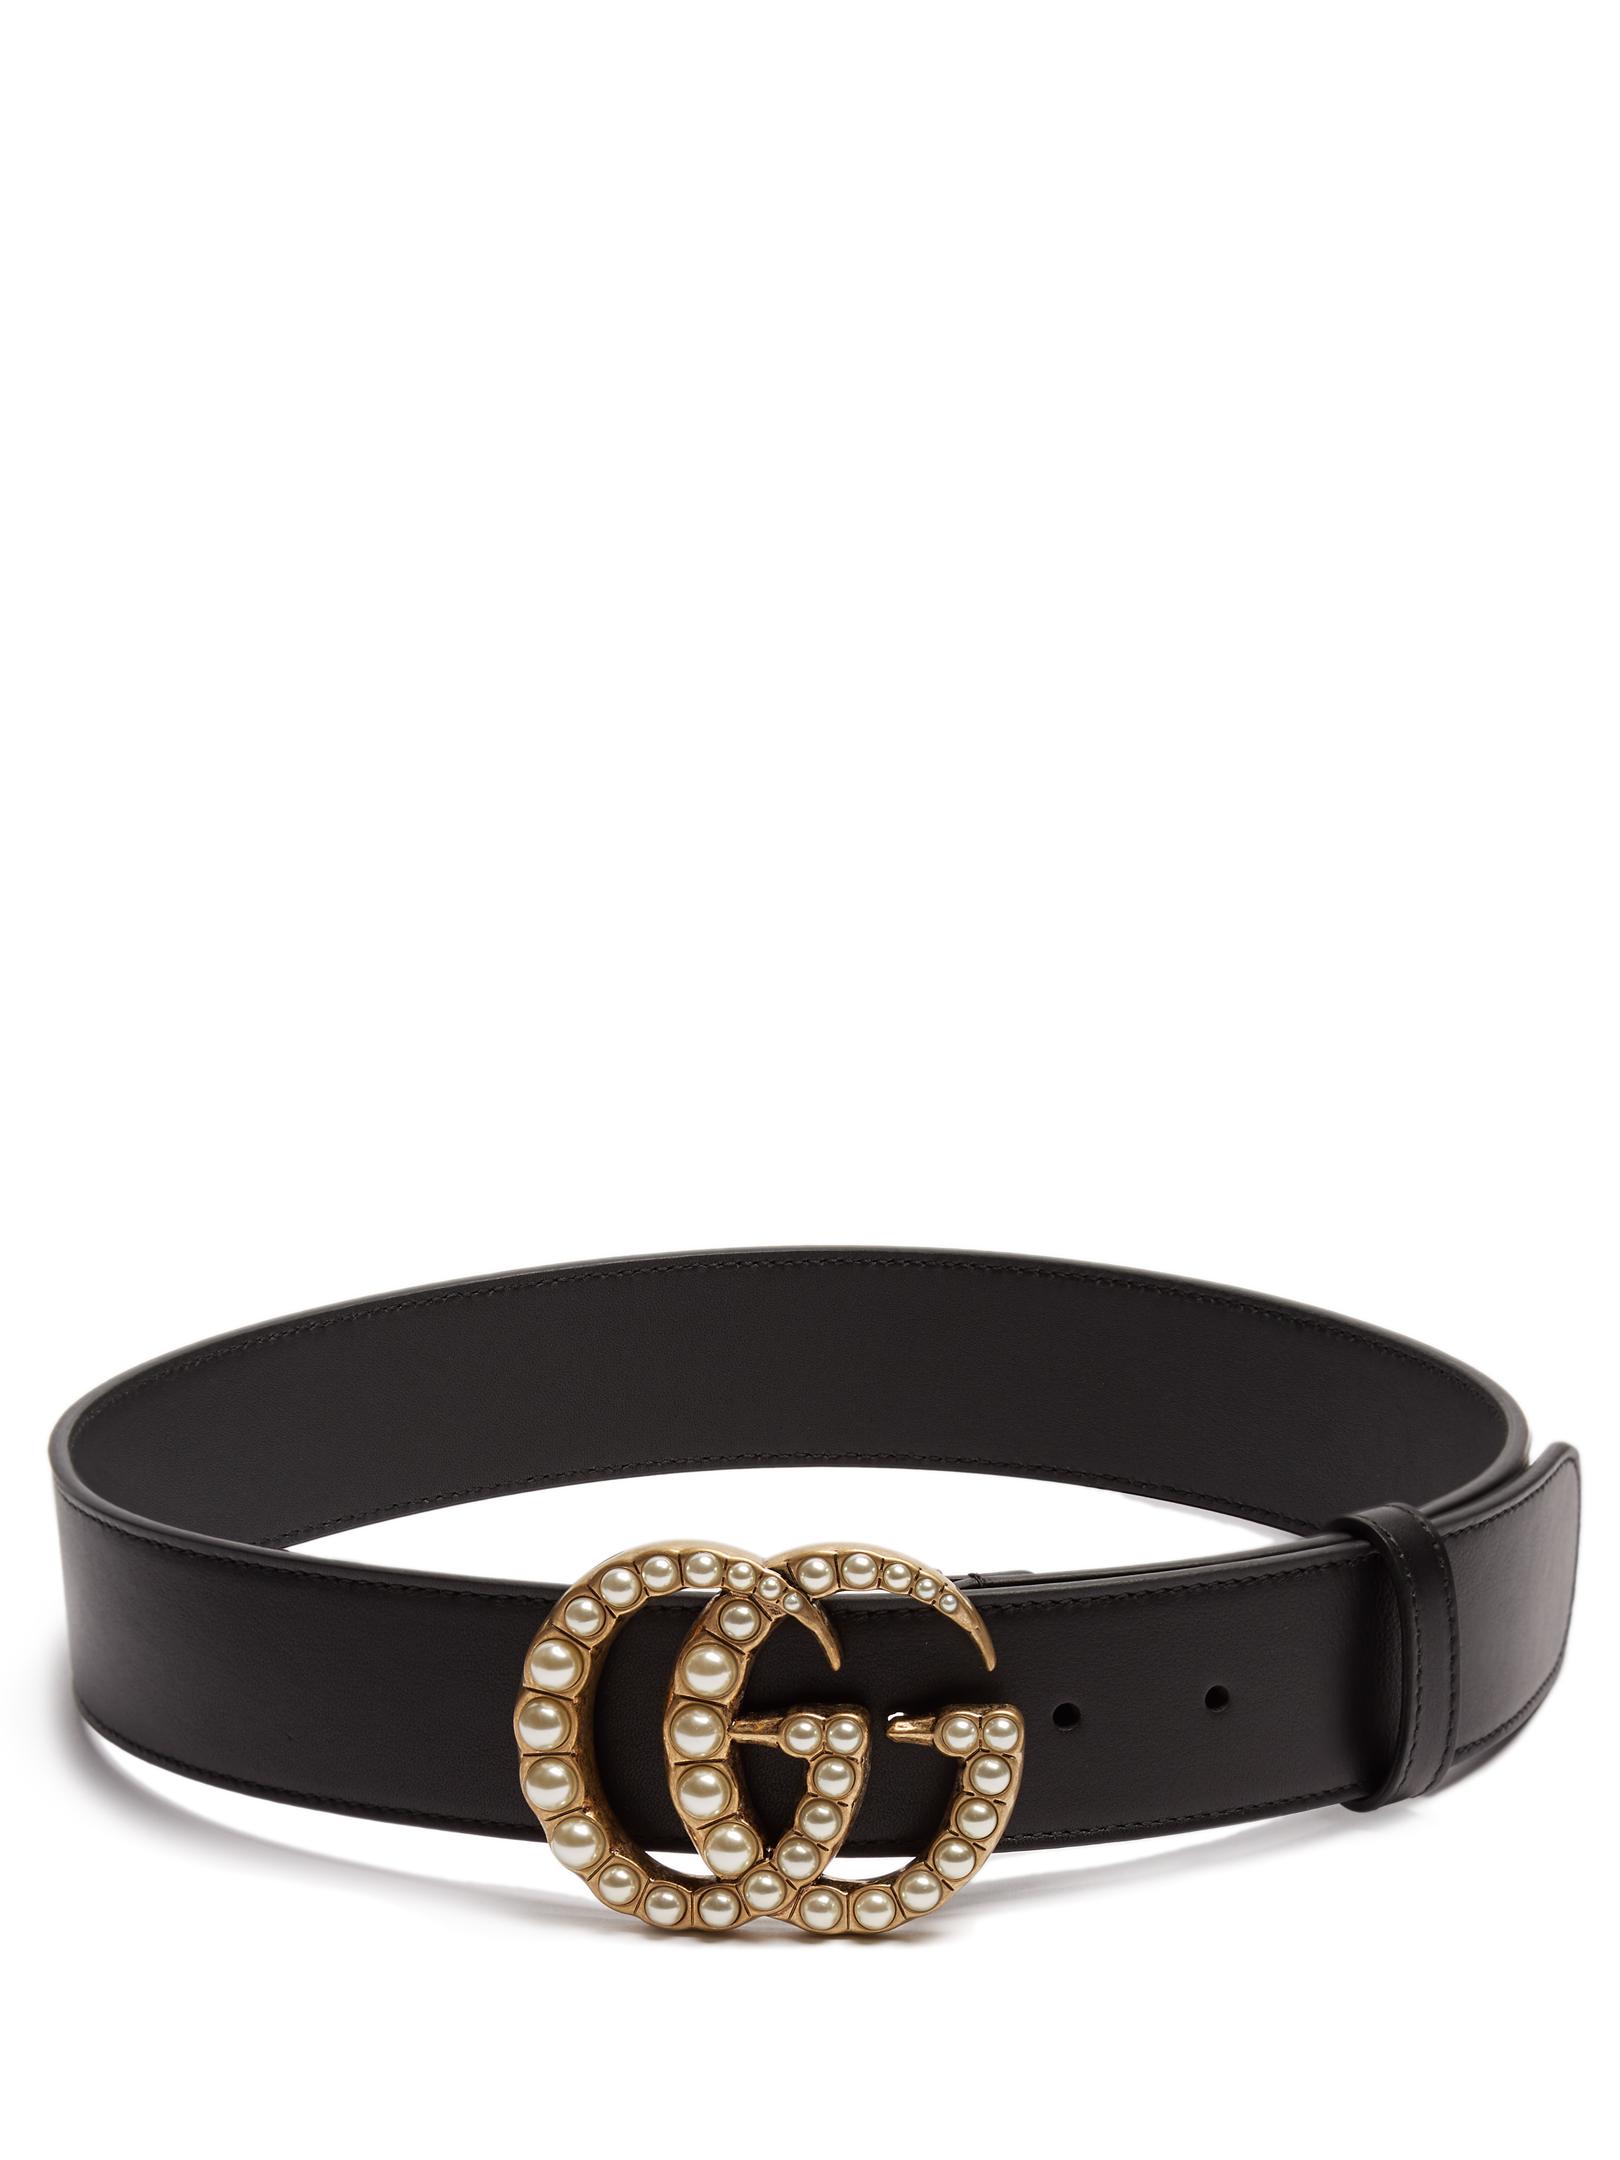 Lyst - Gucci Gg-logo 4cm Leather Belt in Black